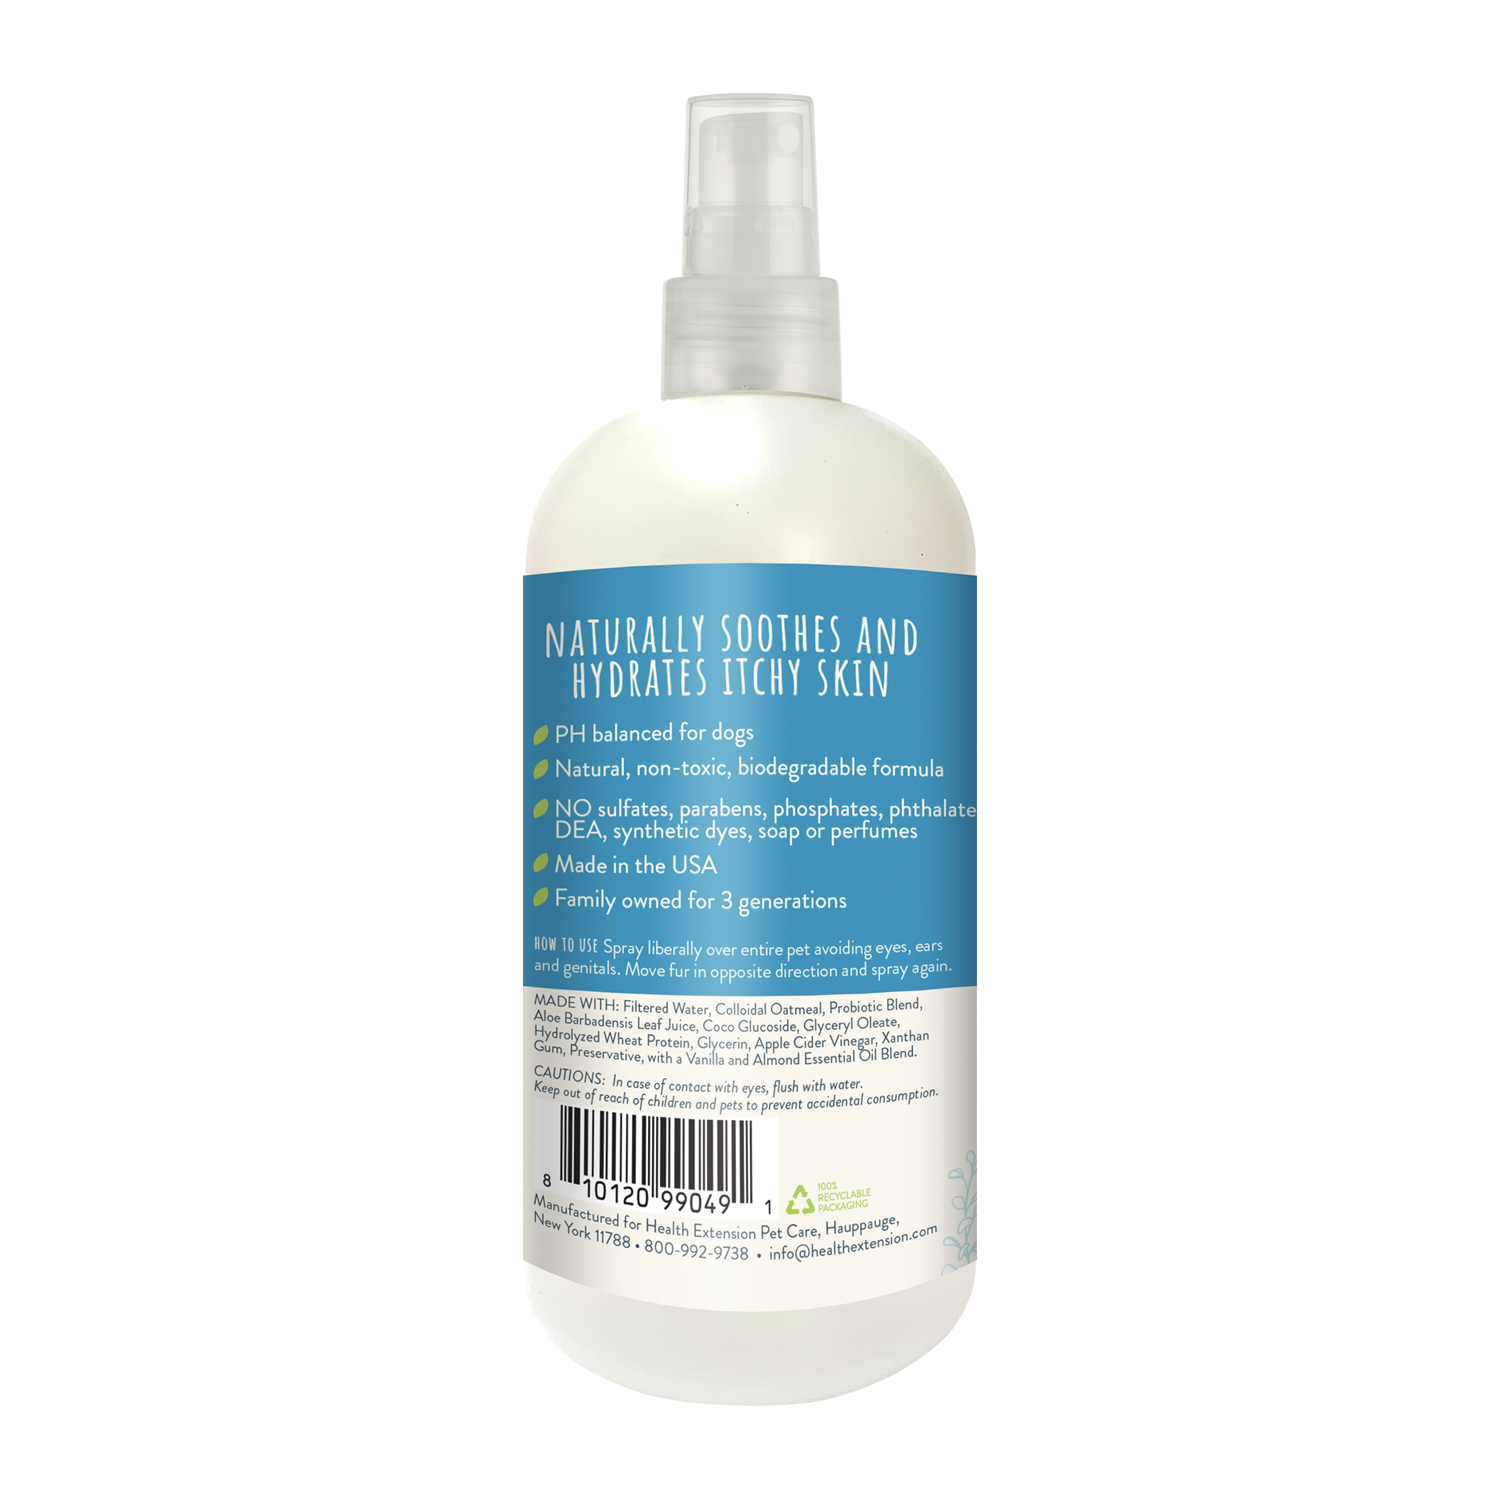 ARI Probiotic Deodorizer Spray – VANILLA + ALMOND